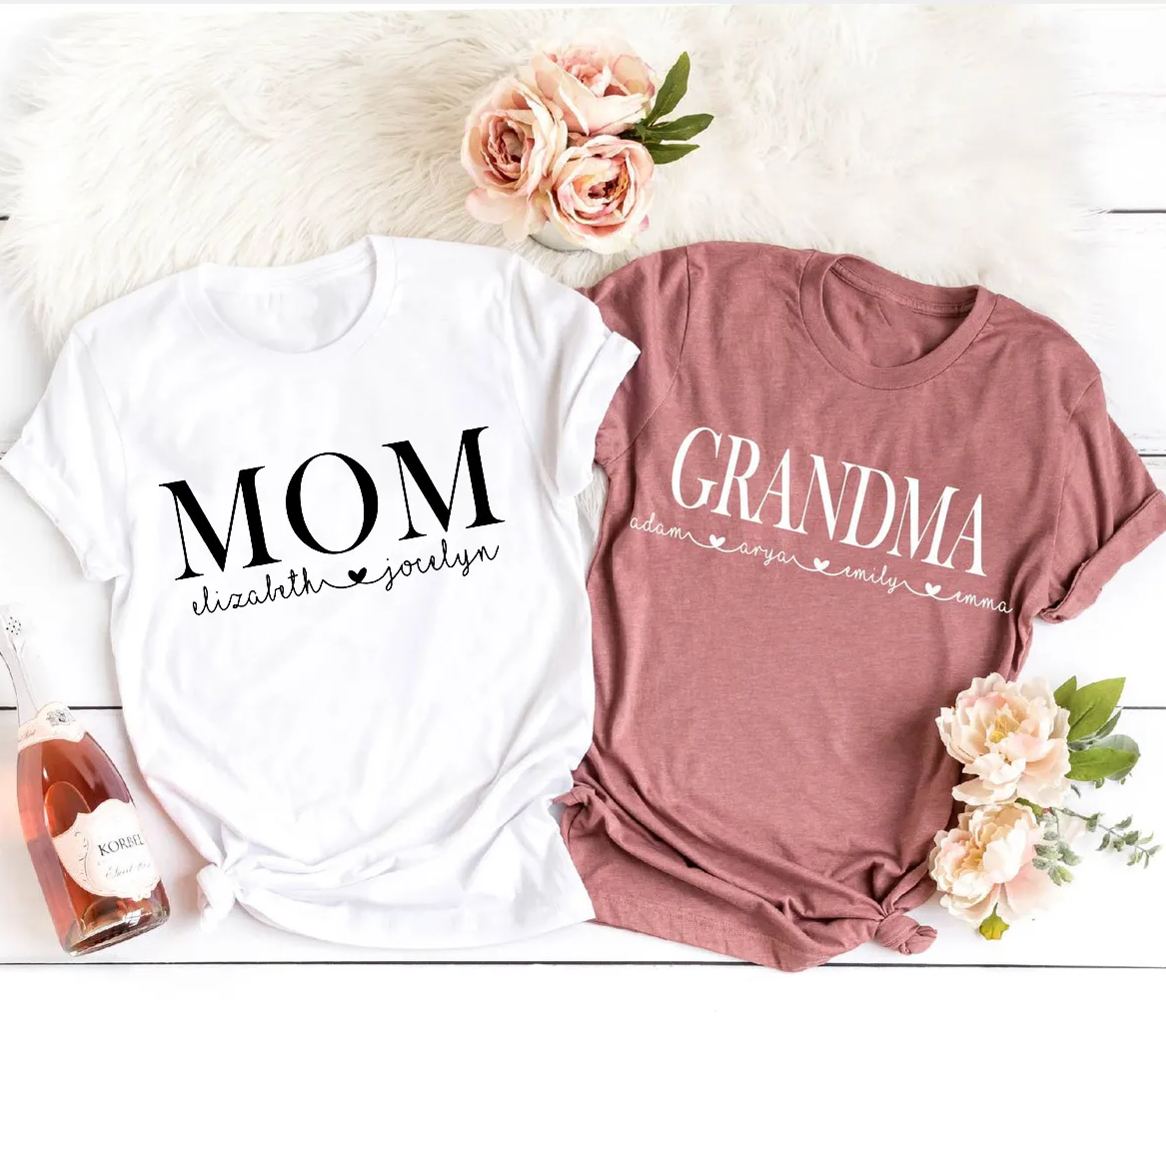 Grandma And Kids Personalized Shirt